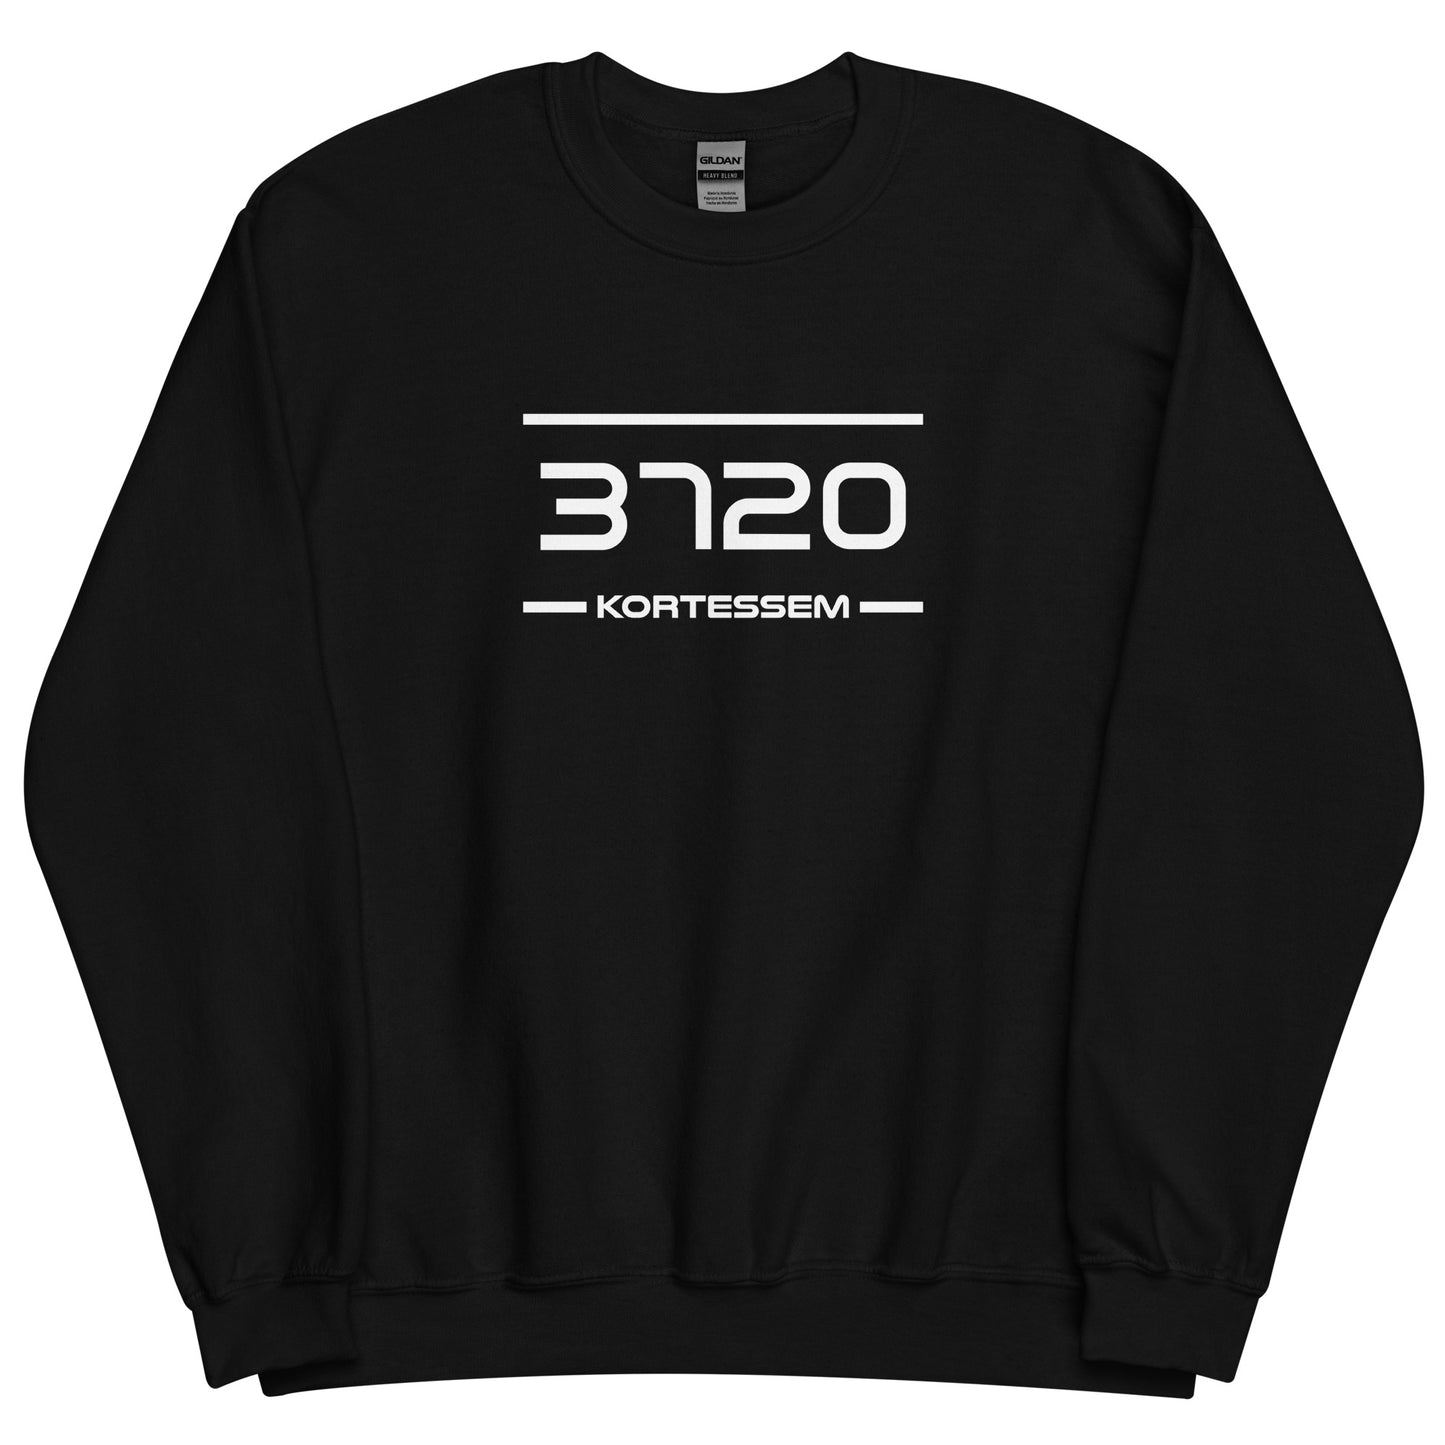 Sweater - 3720 - Kortessem (M/V)